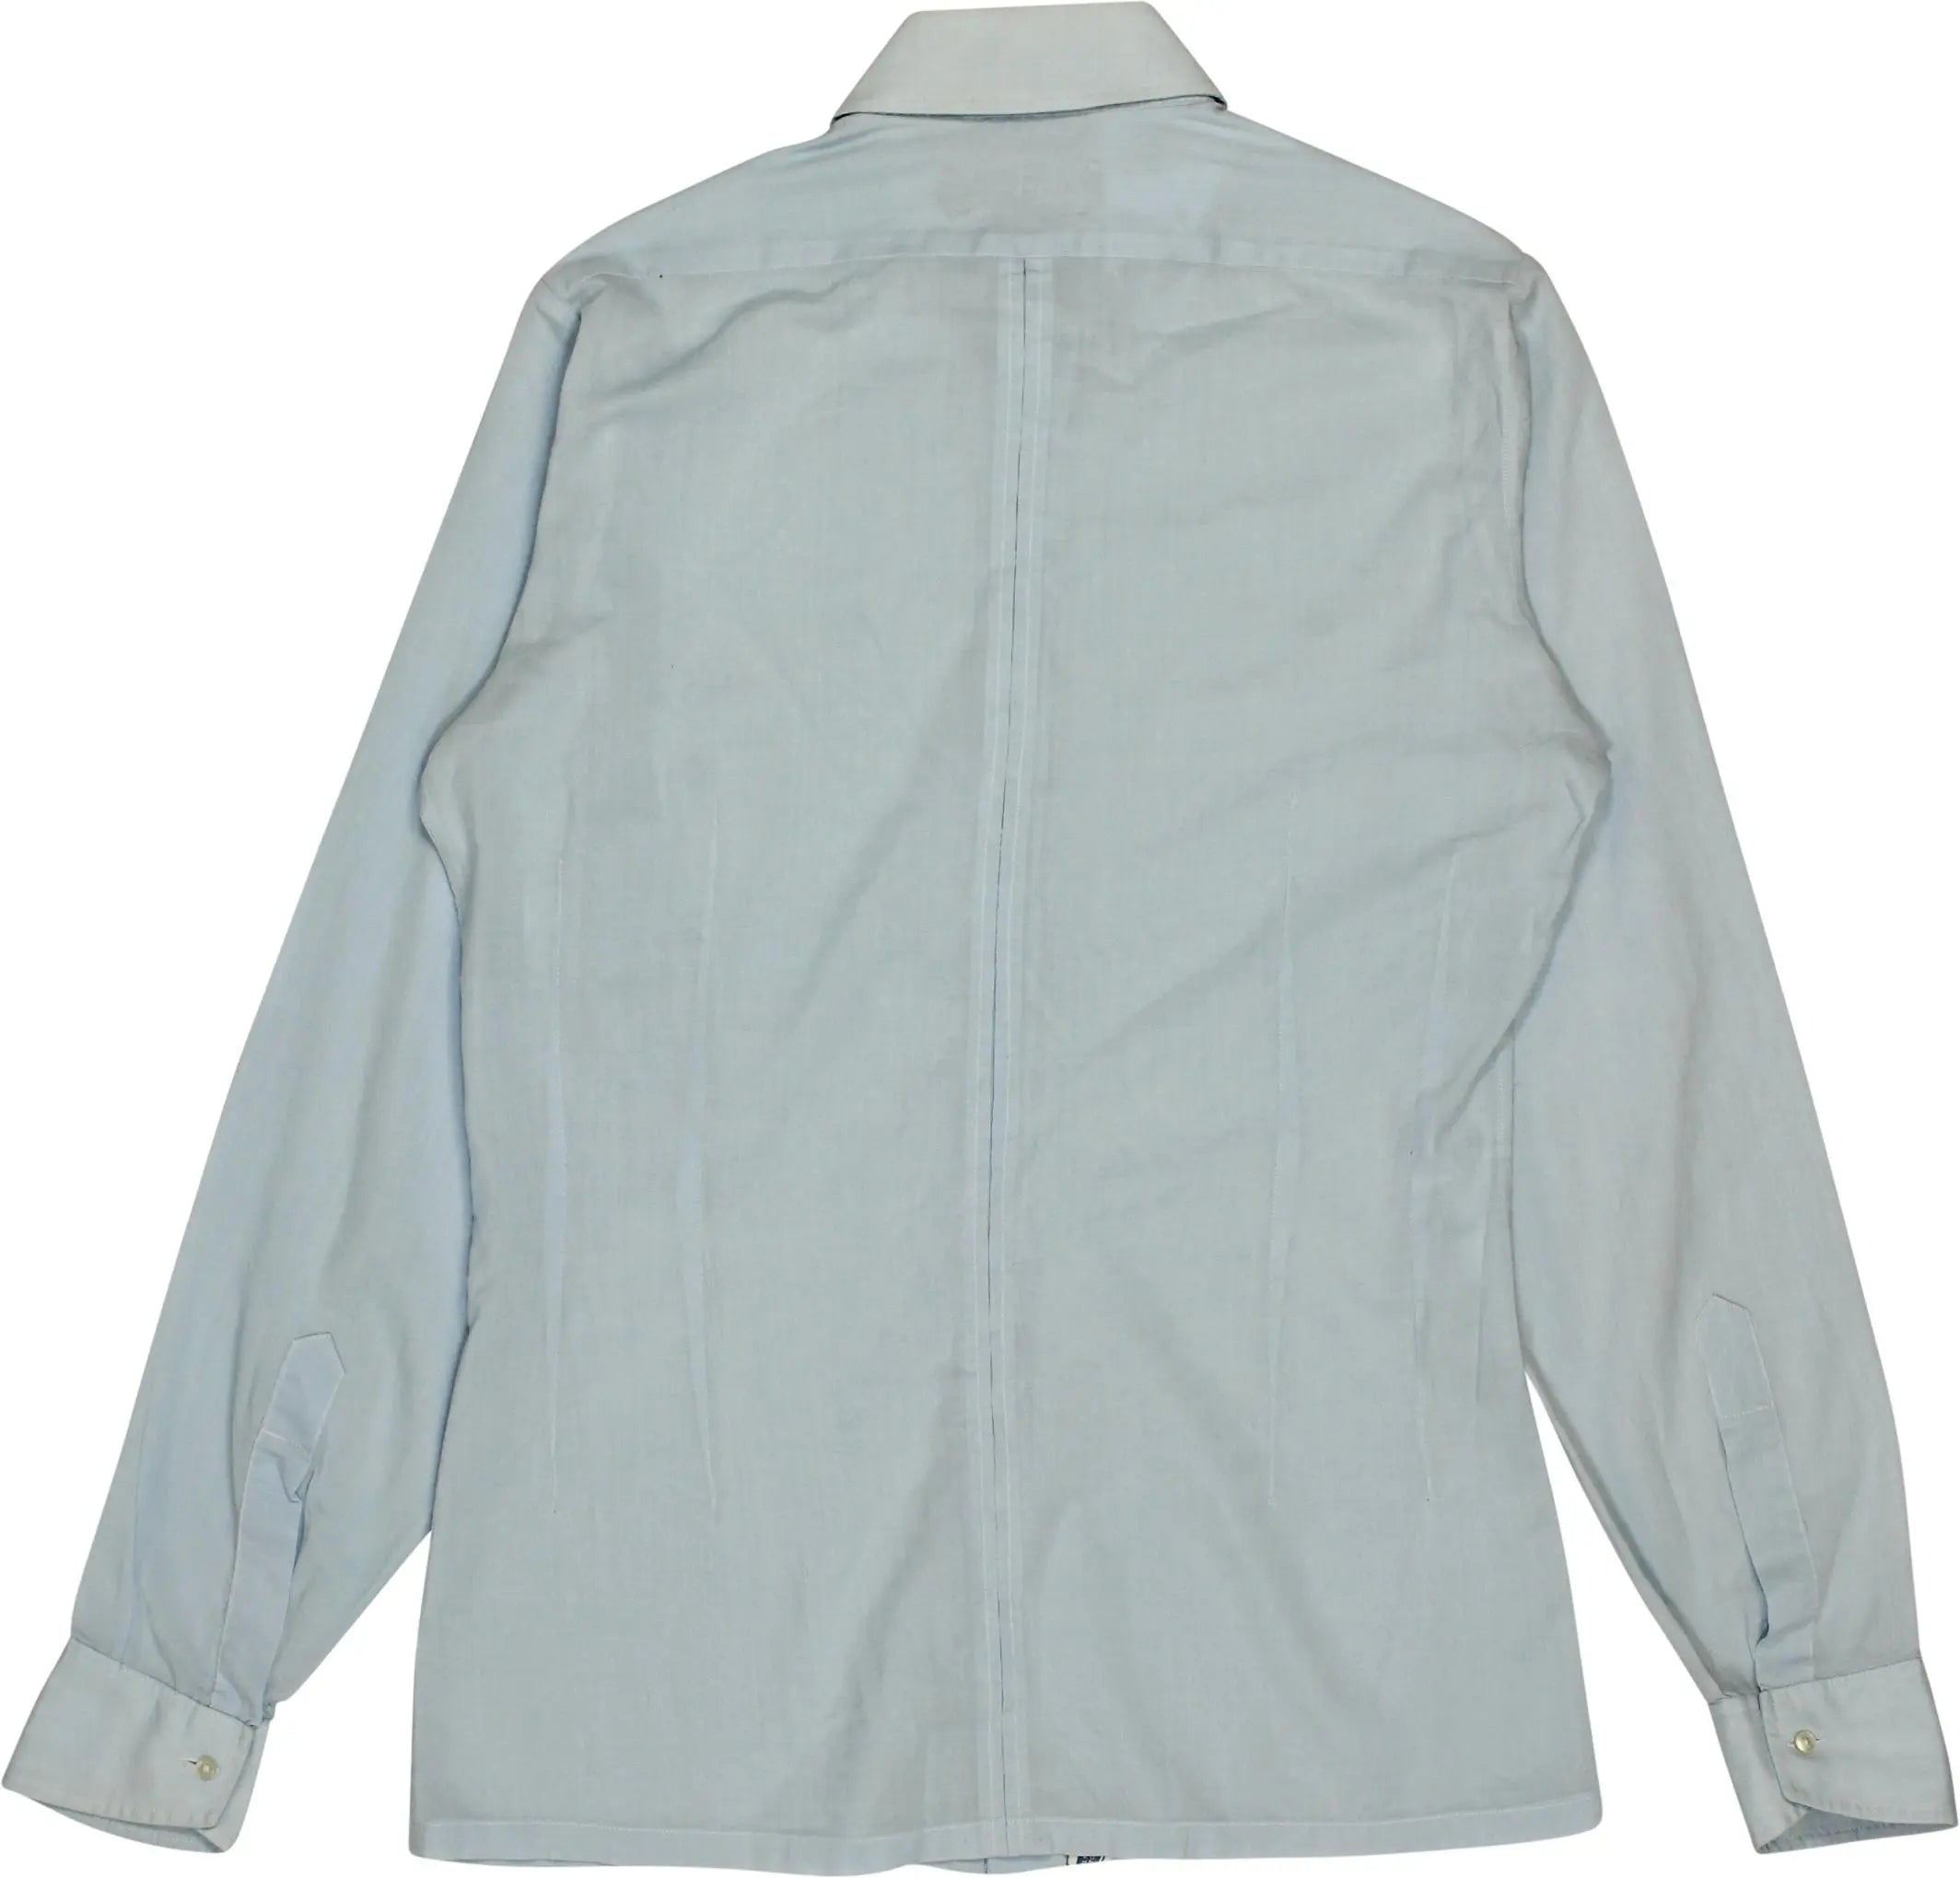 Captain - Plain Shirt- ThriftTale.com - Vintage and second handclothing